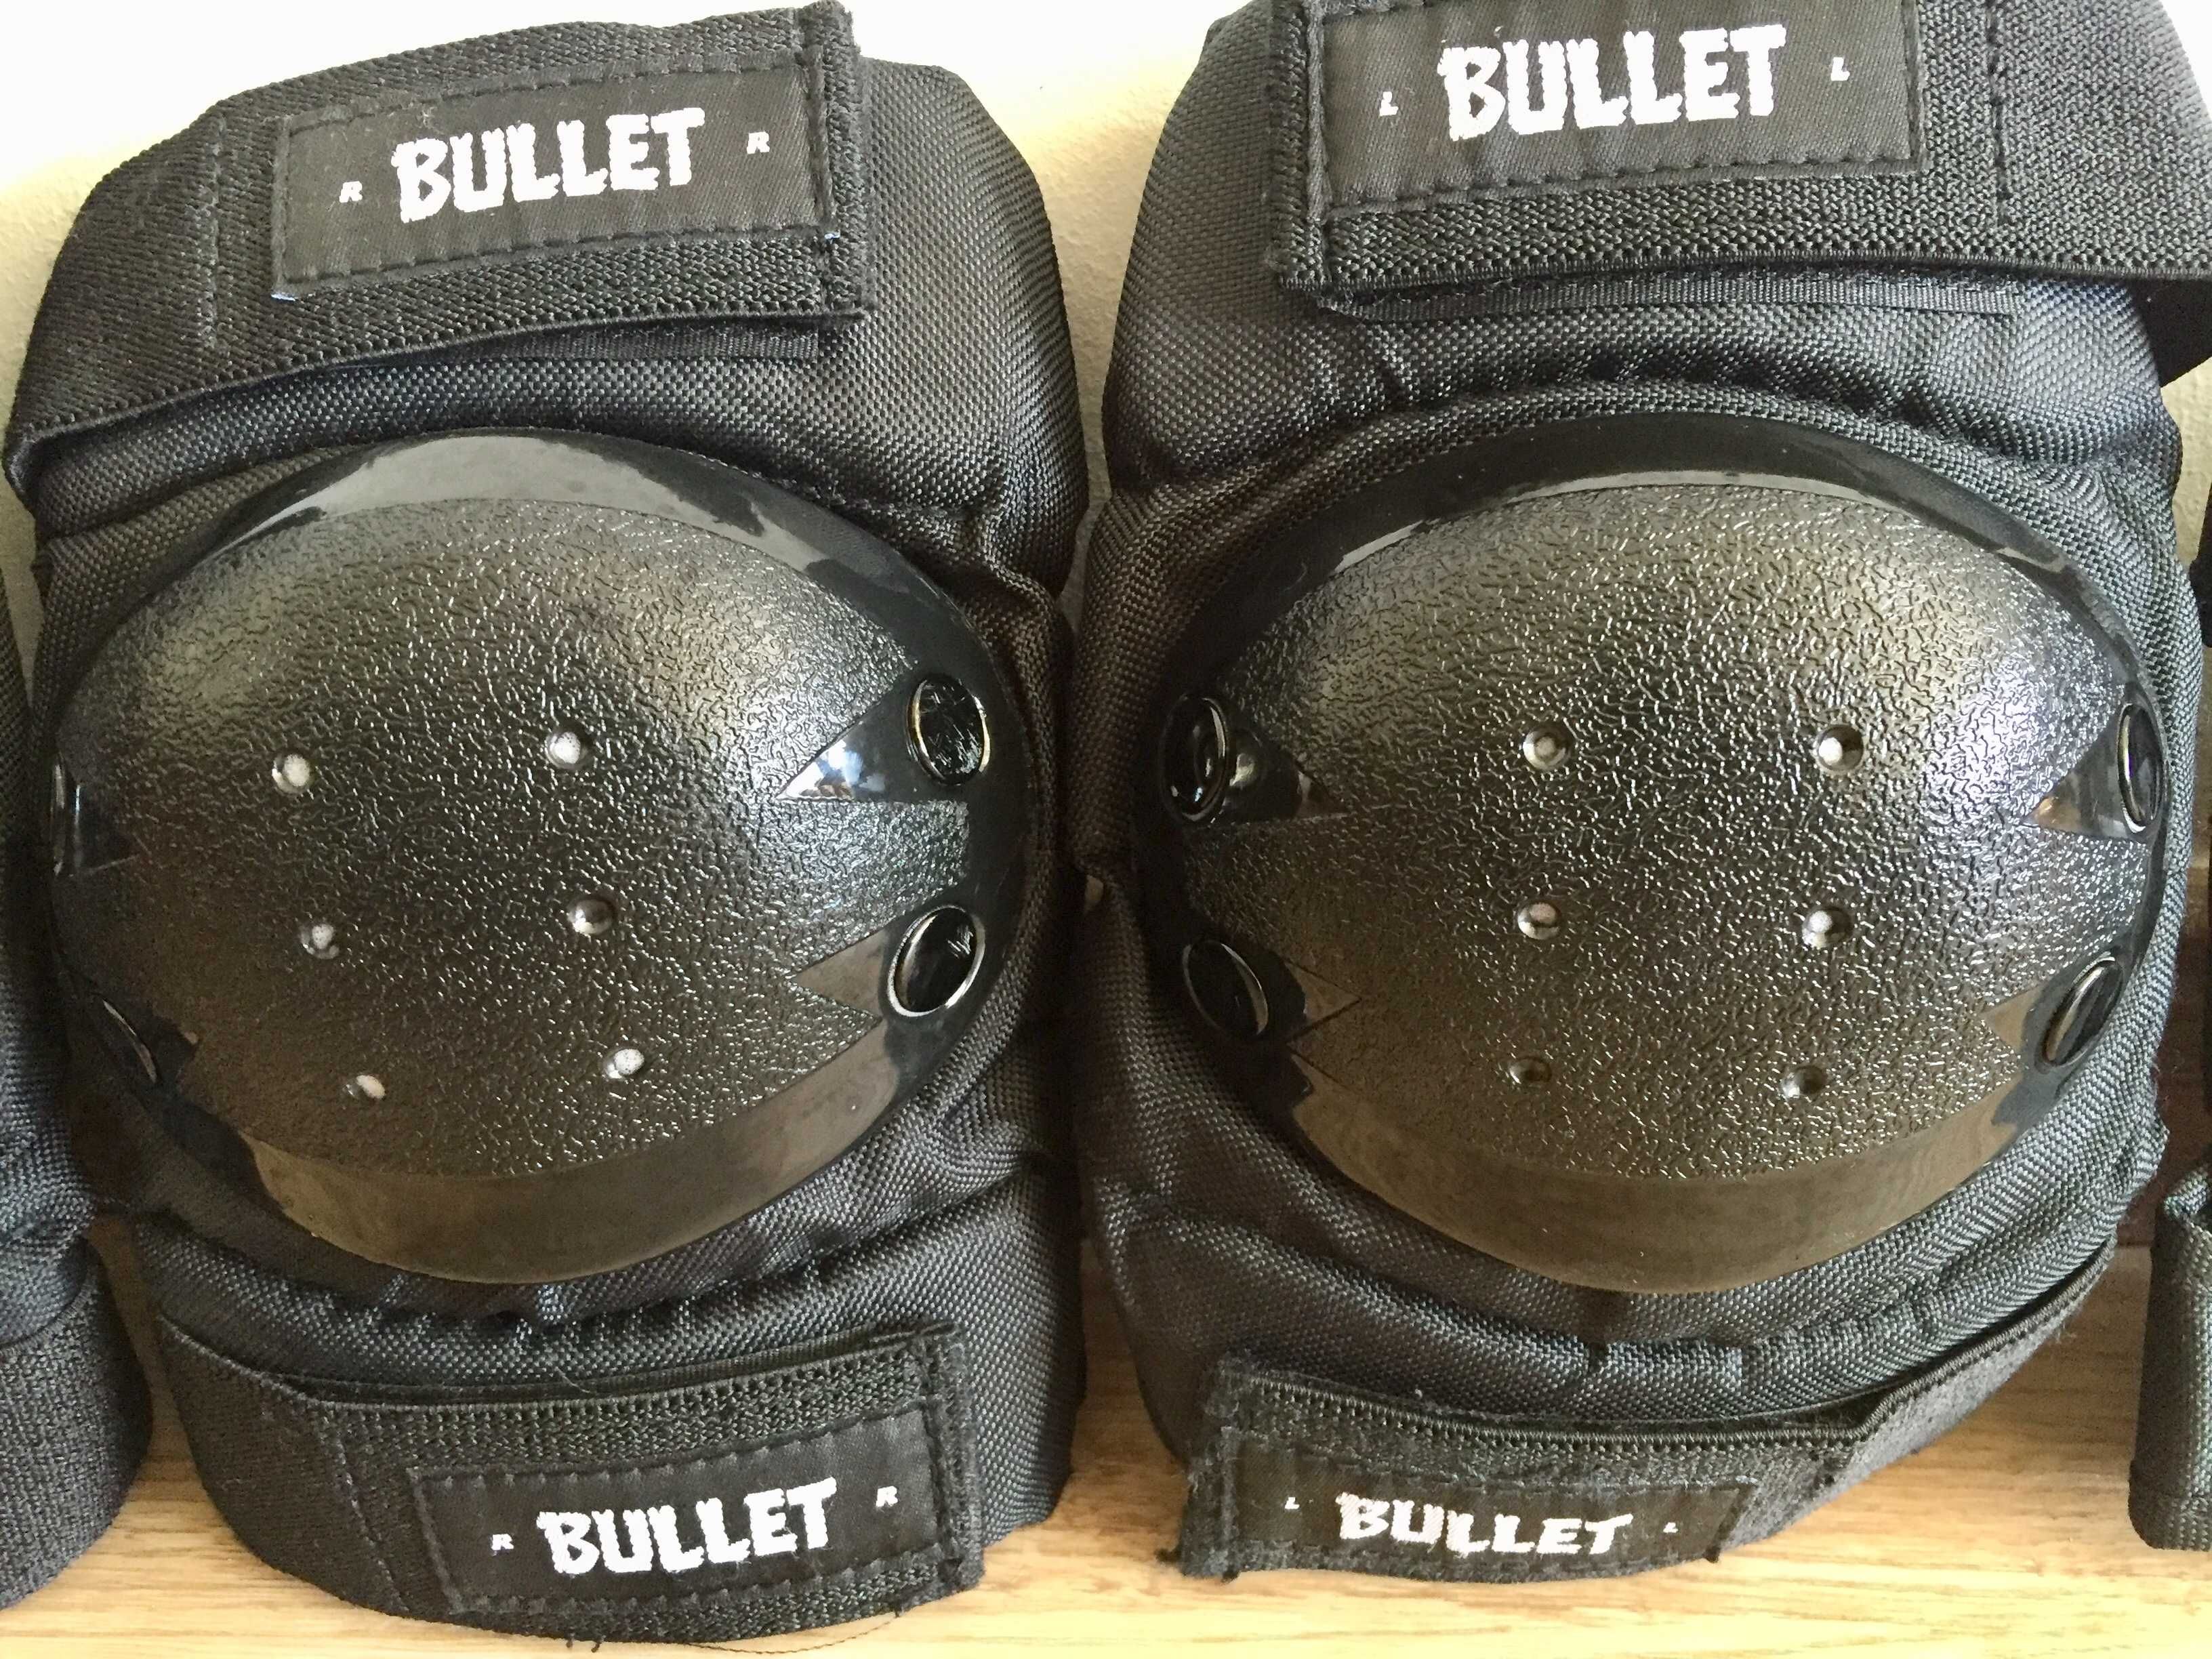 Kit Novo Protecções Desporto Bullet